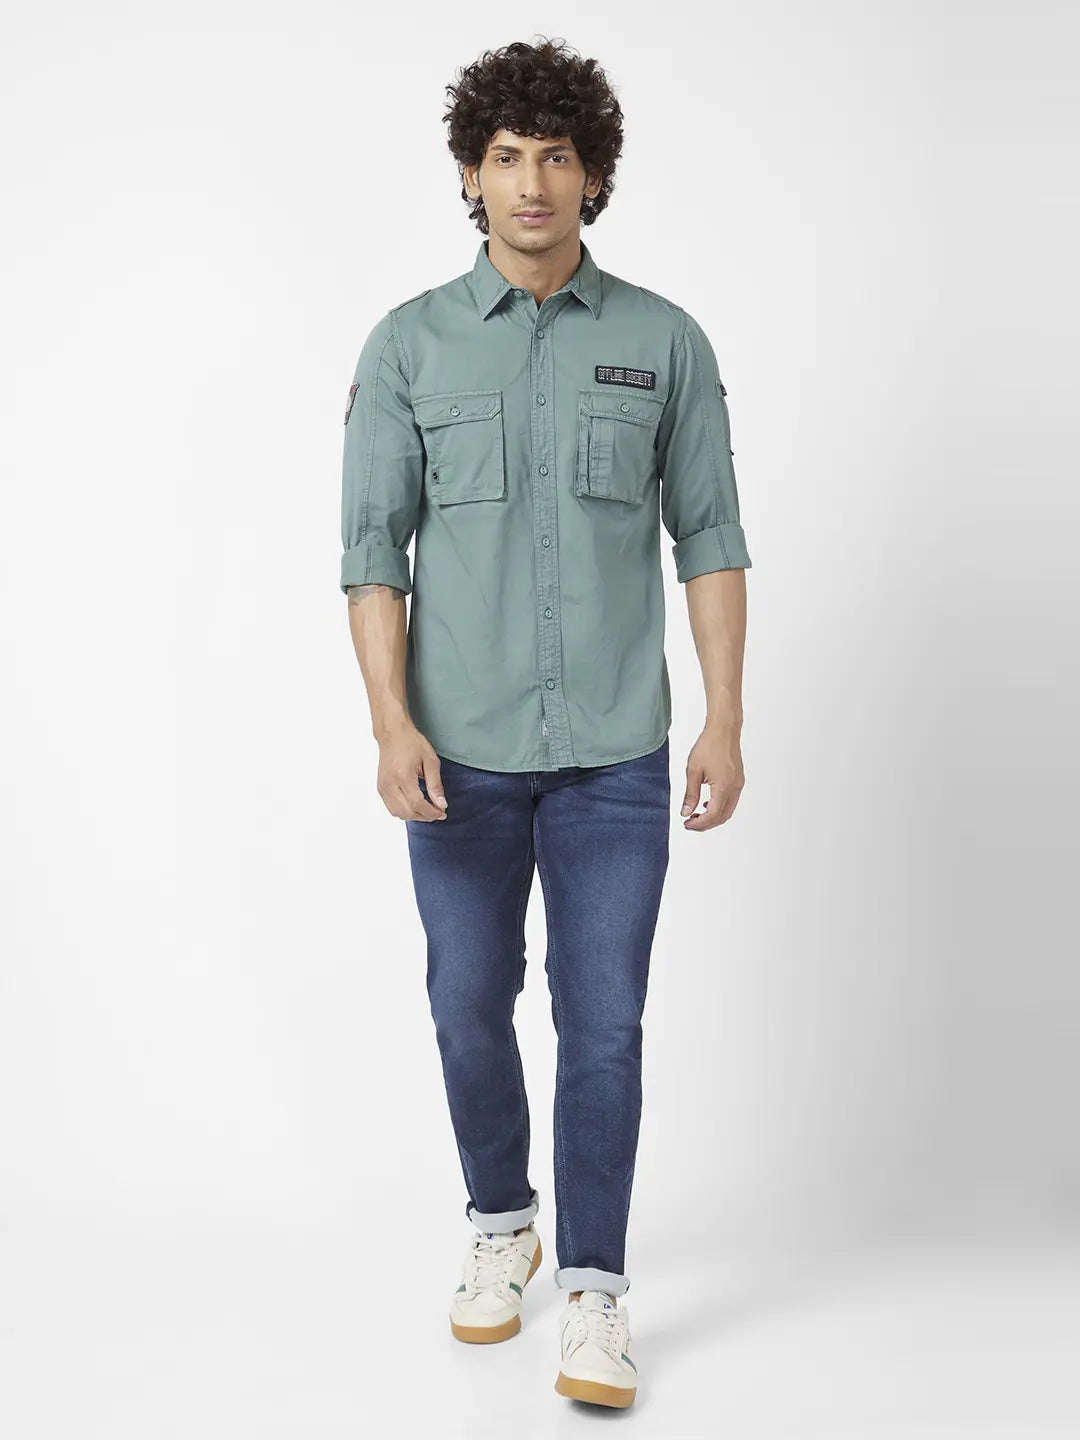 Camla Barcelona Washed Sage Green Shirt For Men | Buy SIZE 3XL Shirt Online  for | Glamly